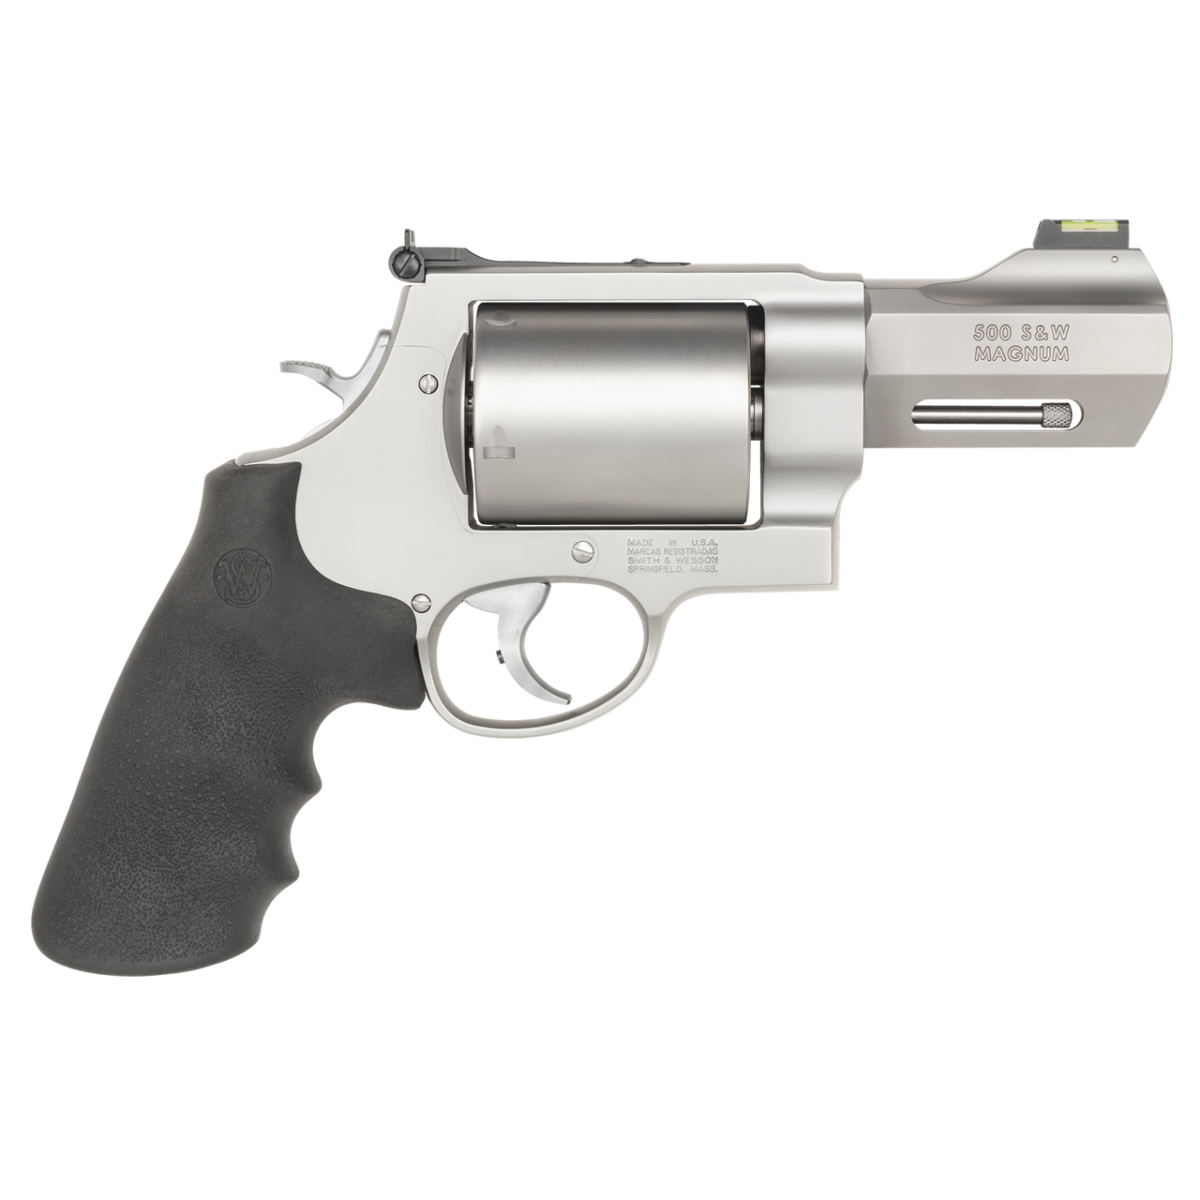 Buy Smith & Wesson Performance Center Model S&W500 HI VIZ Fiber Optic Revolver Online